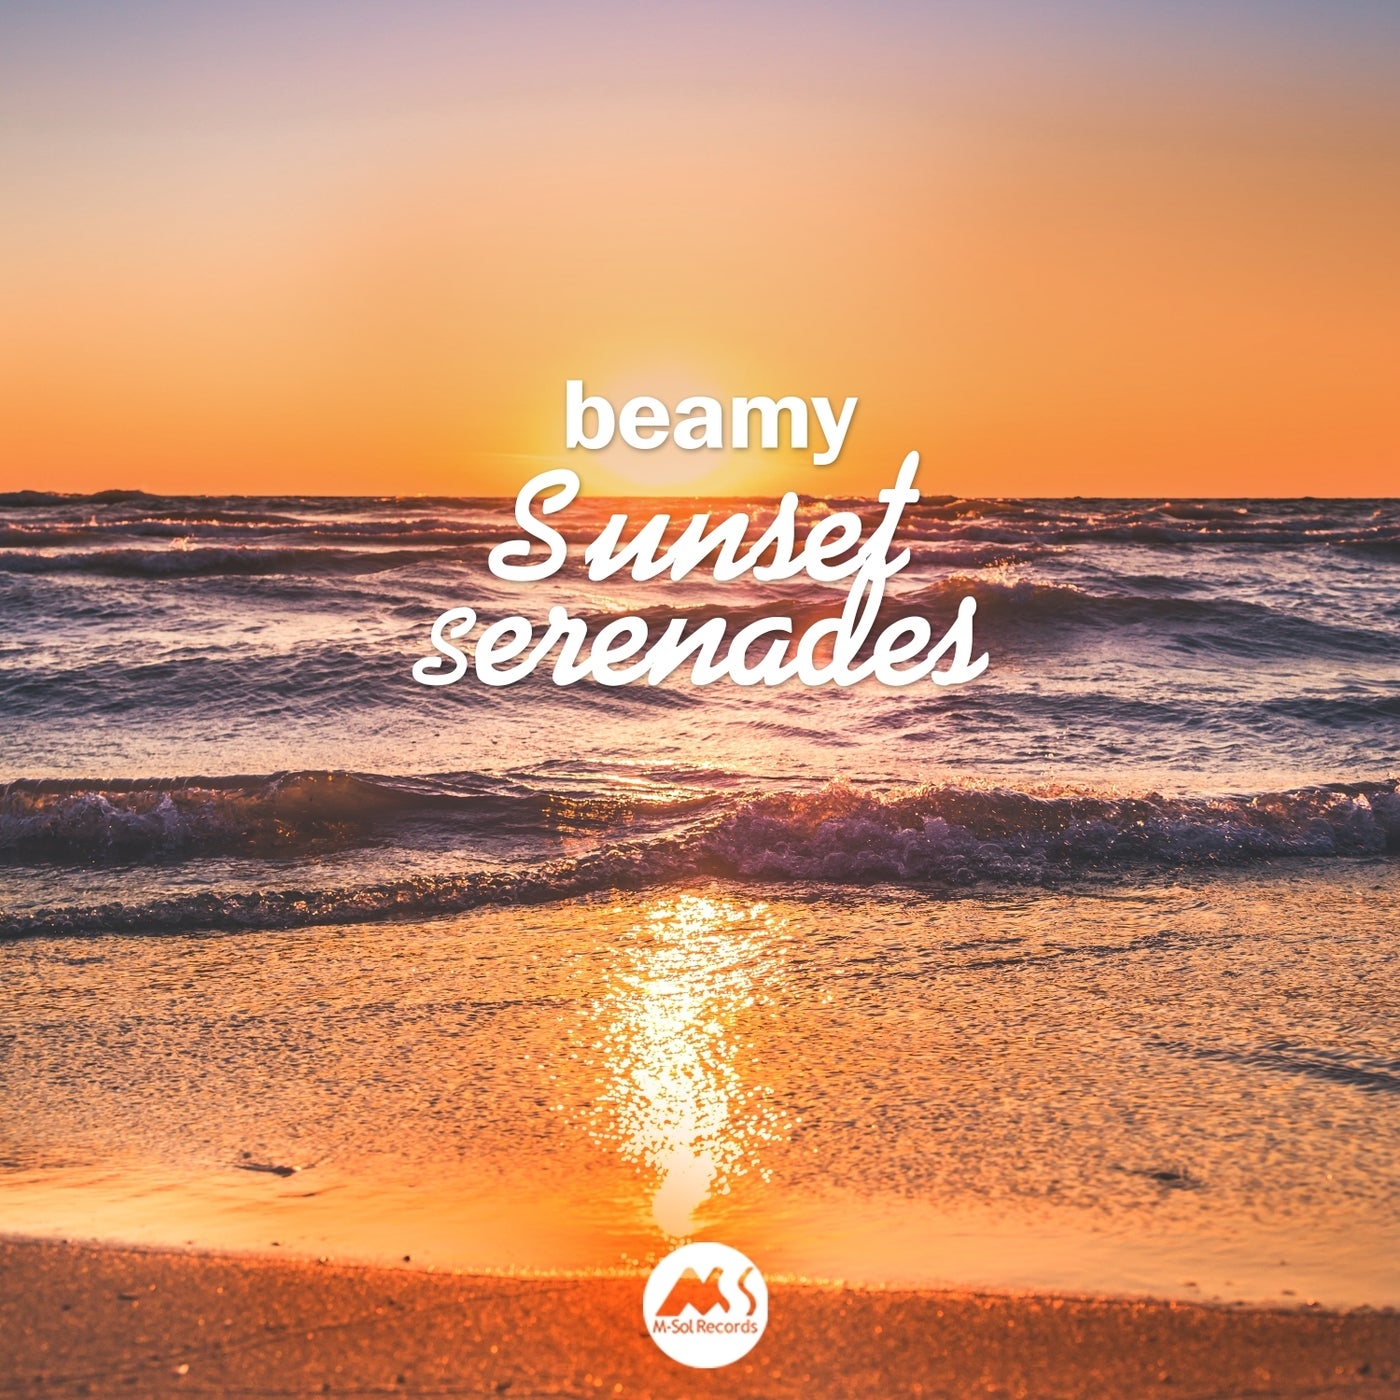 Sunset Serenades